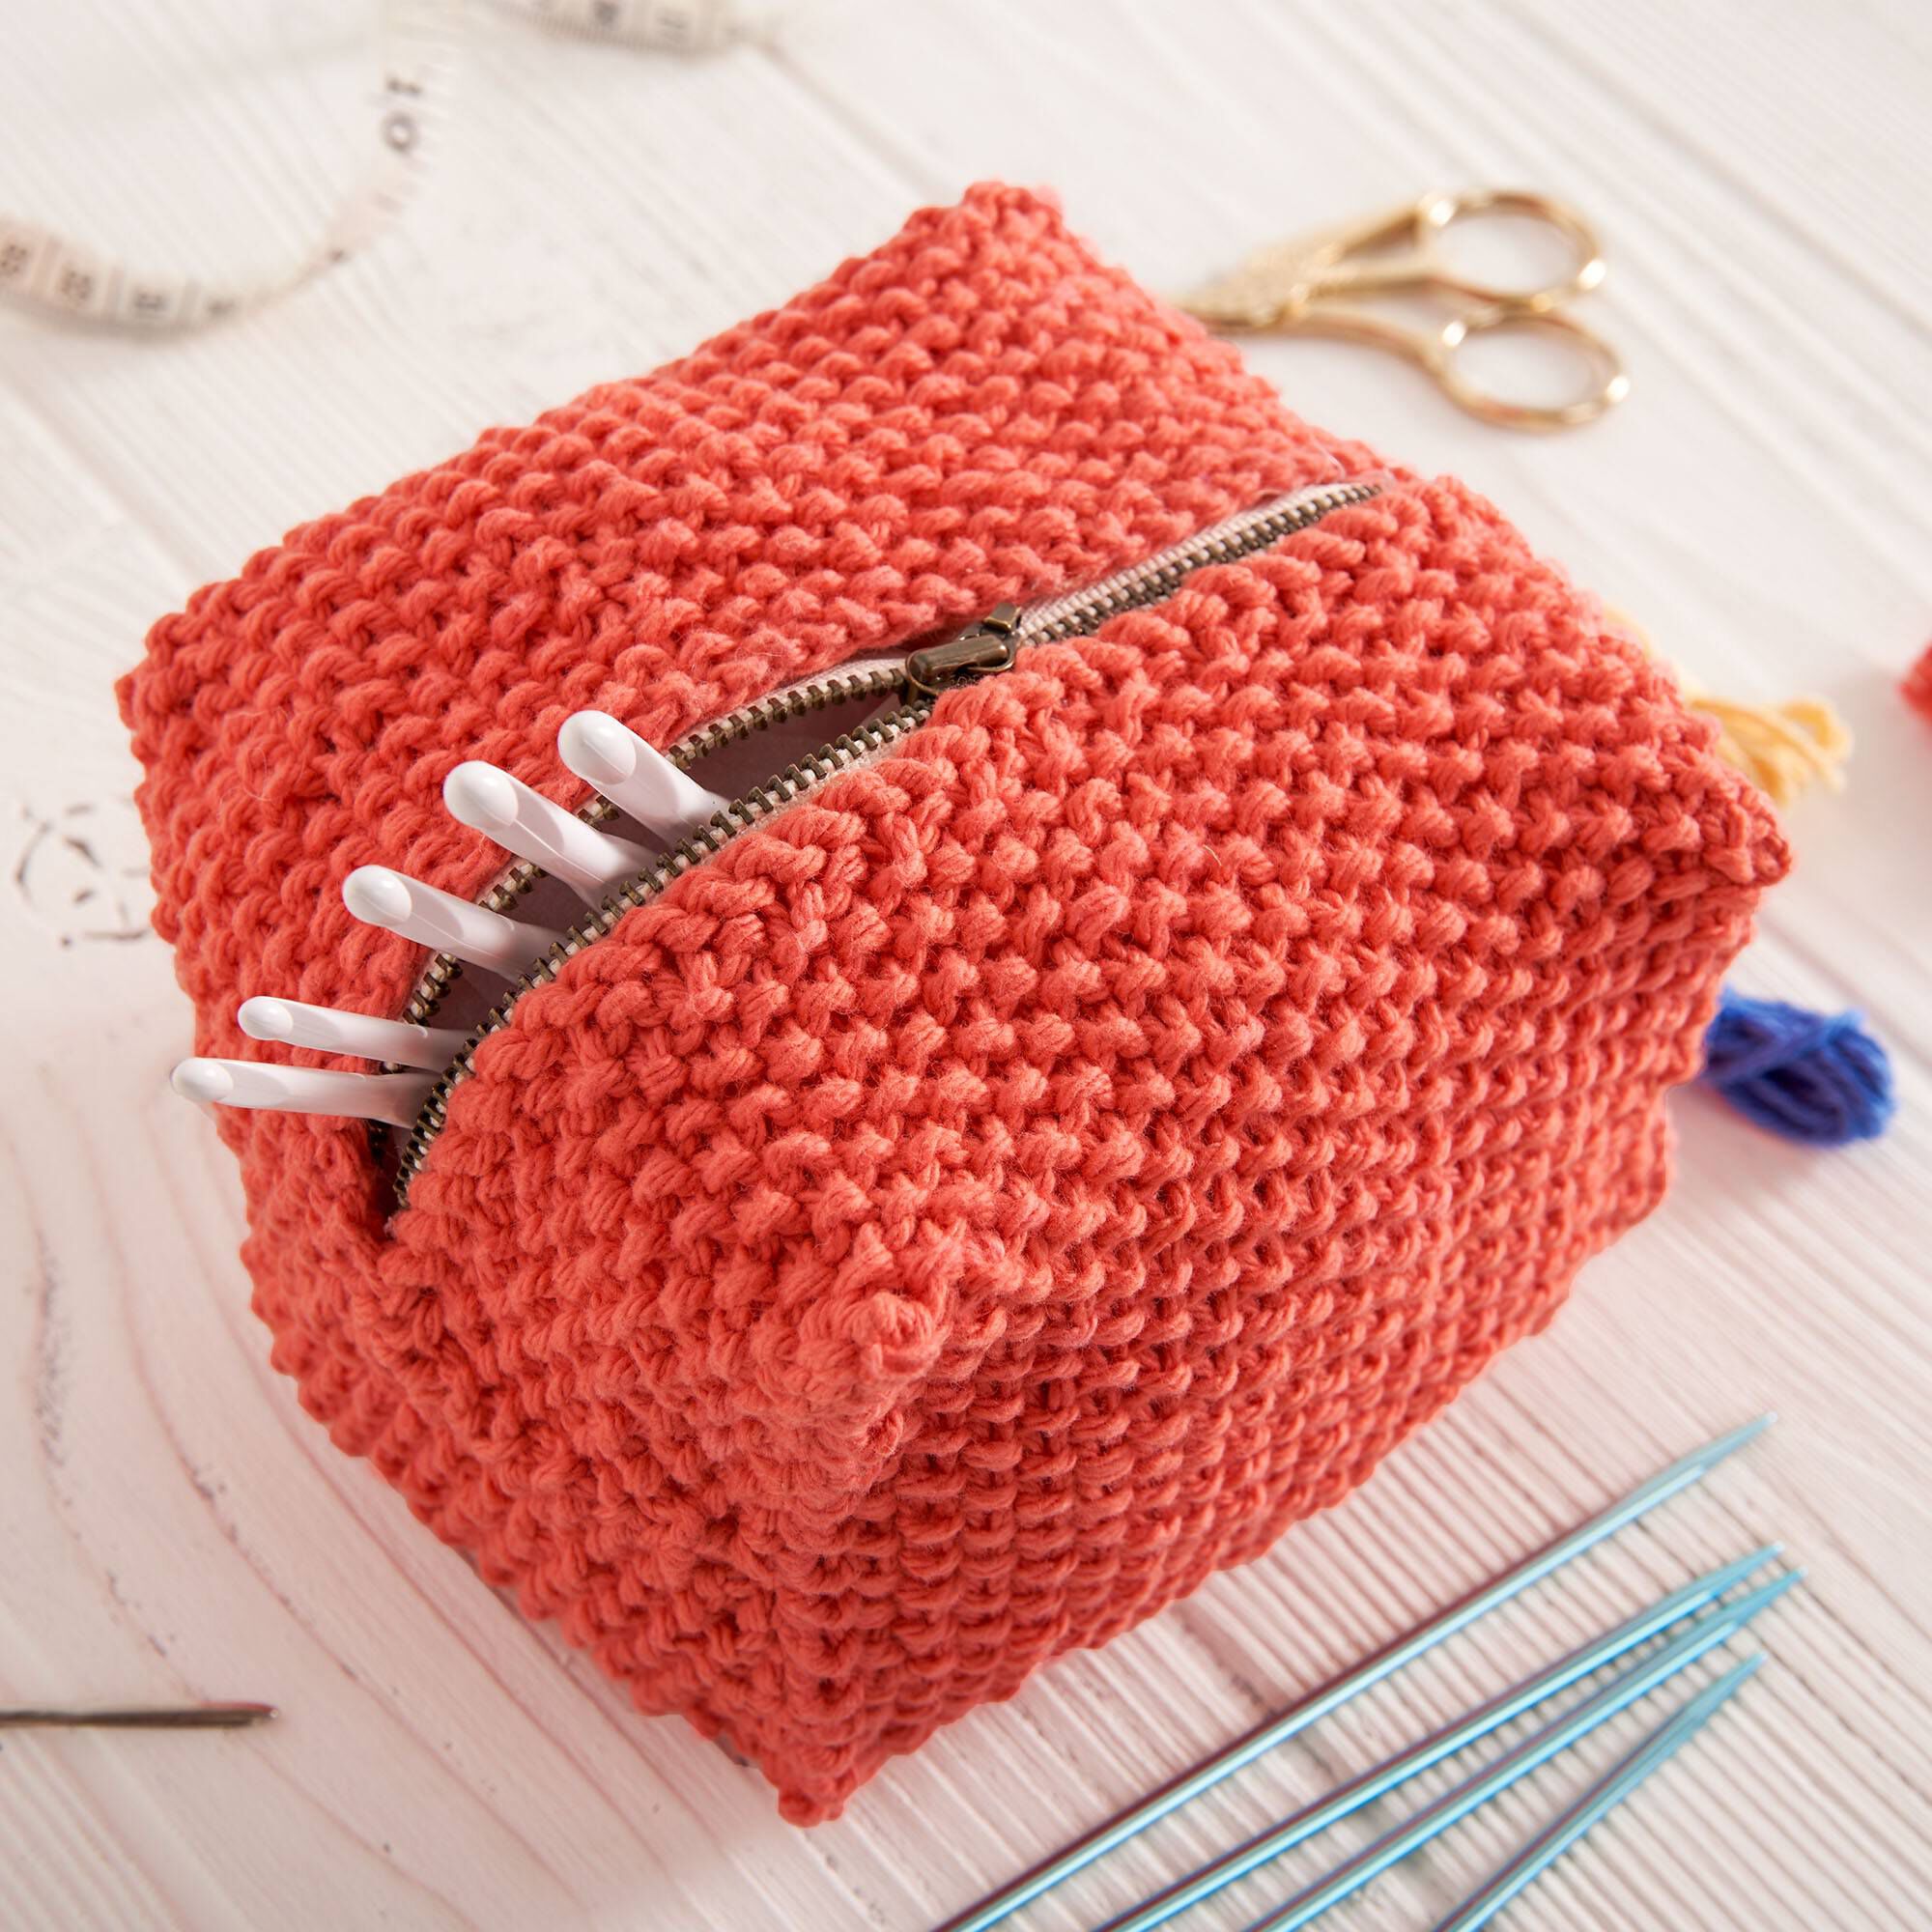 Camera coin purse crochet pattern - A little love everyday!